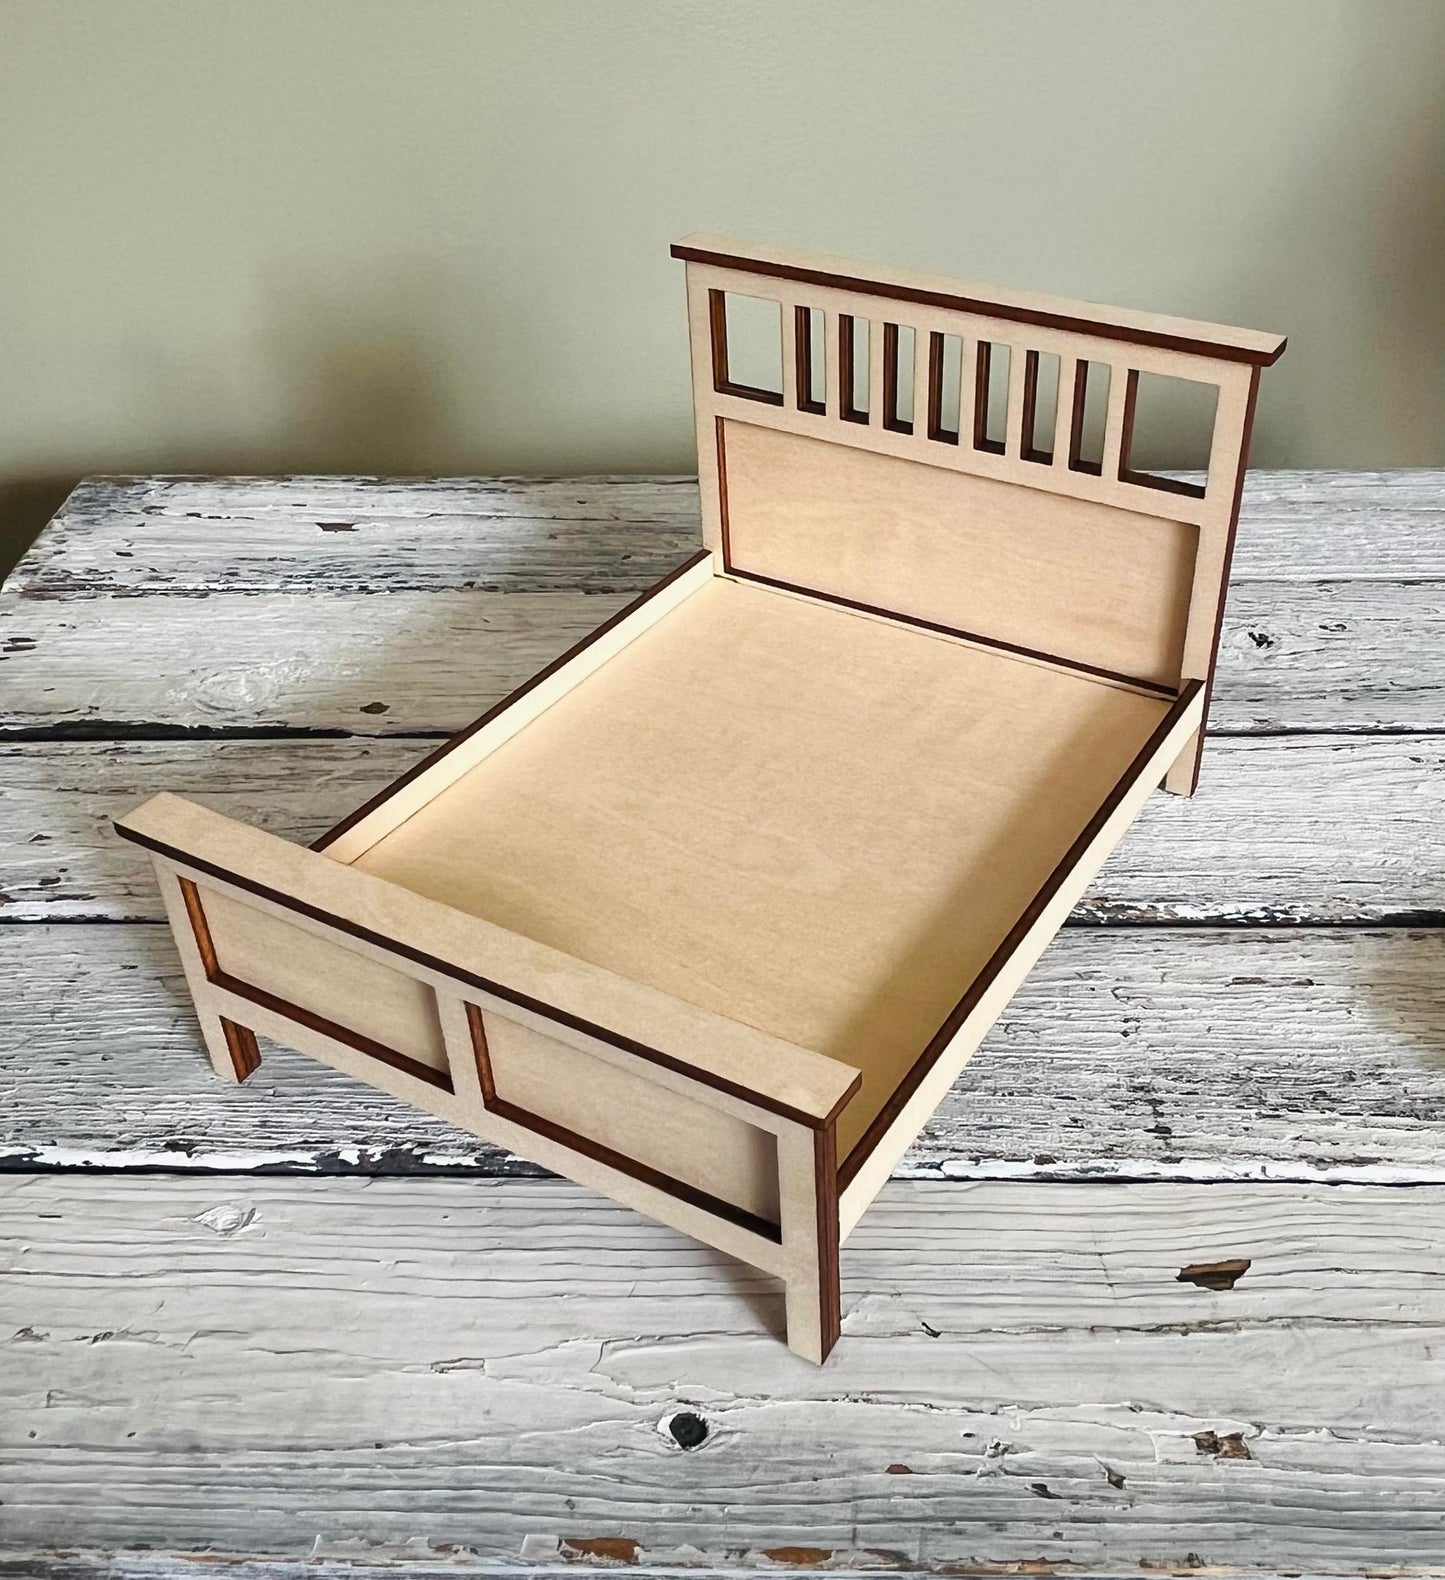 Miniature Bed Kit